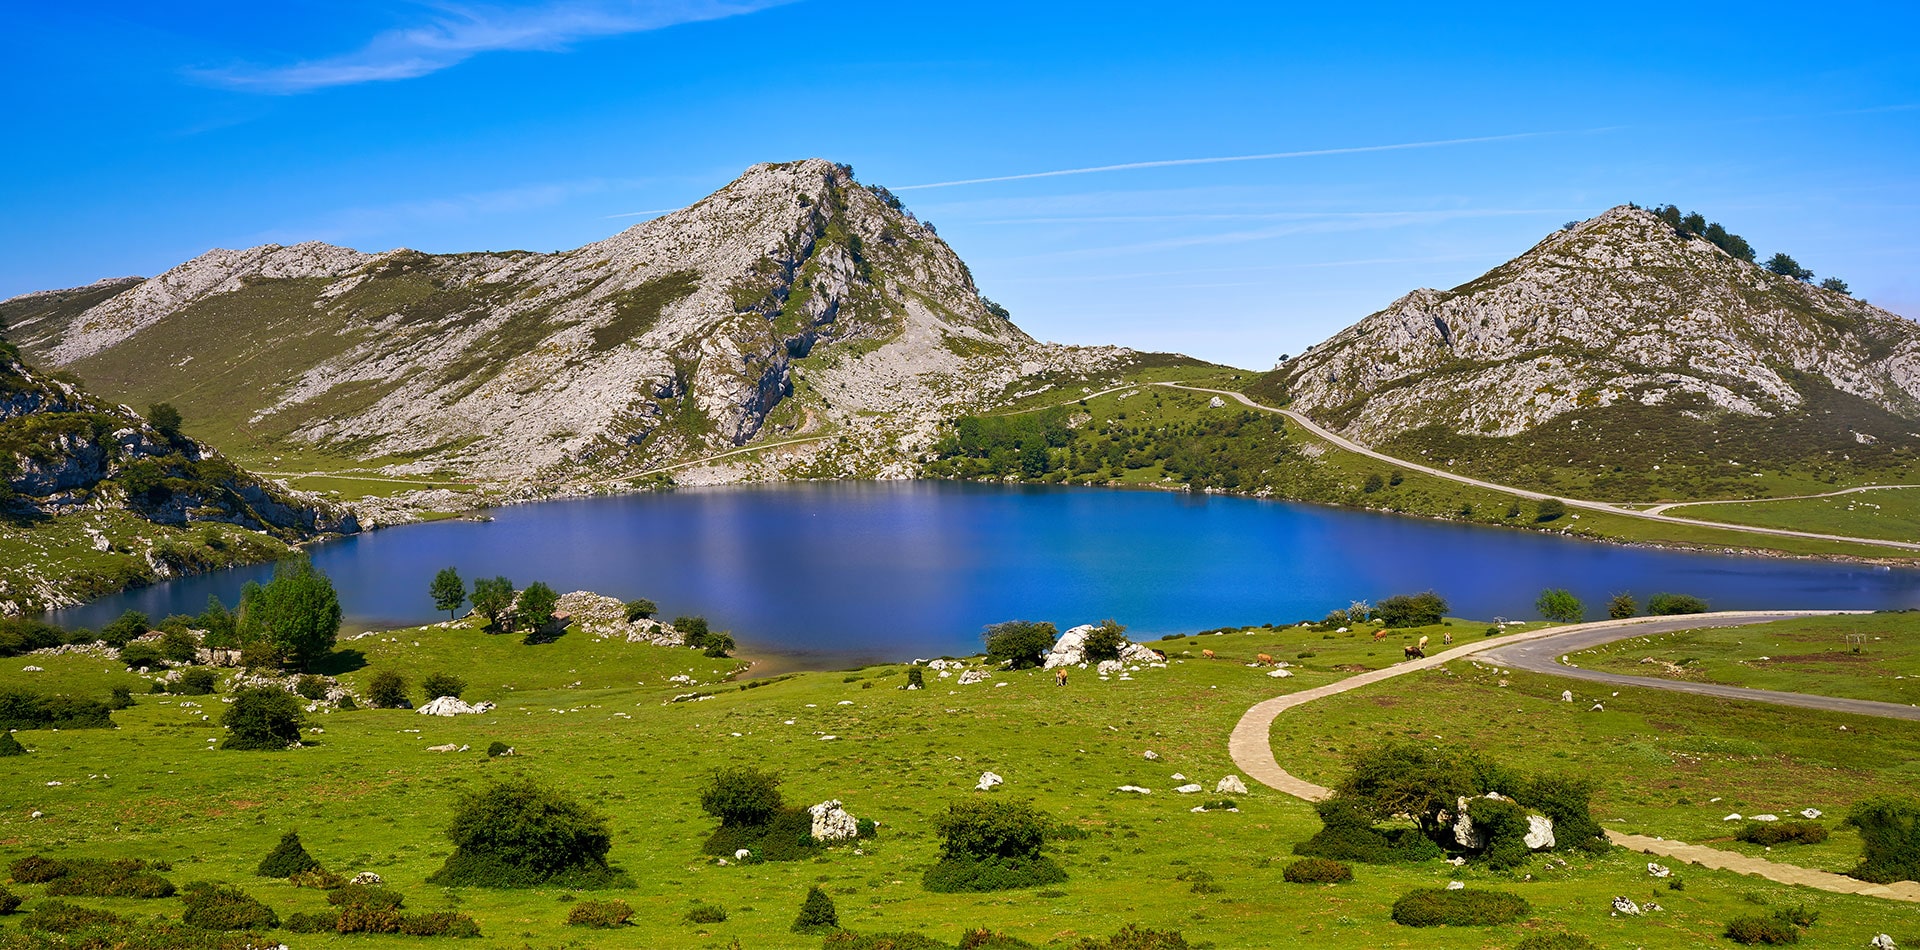 Enol lake at Picos de Europa in Asturias Spain